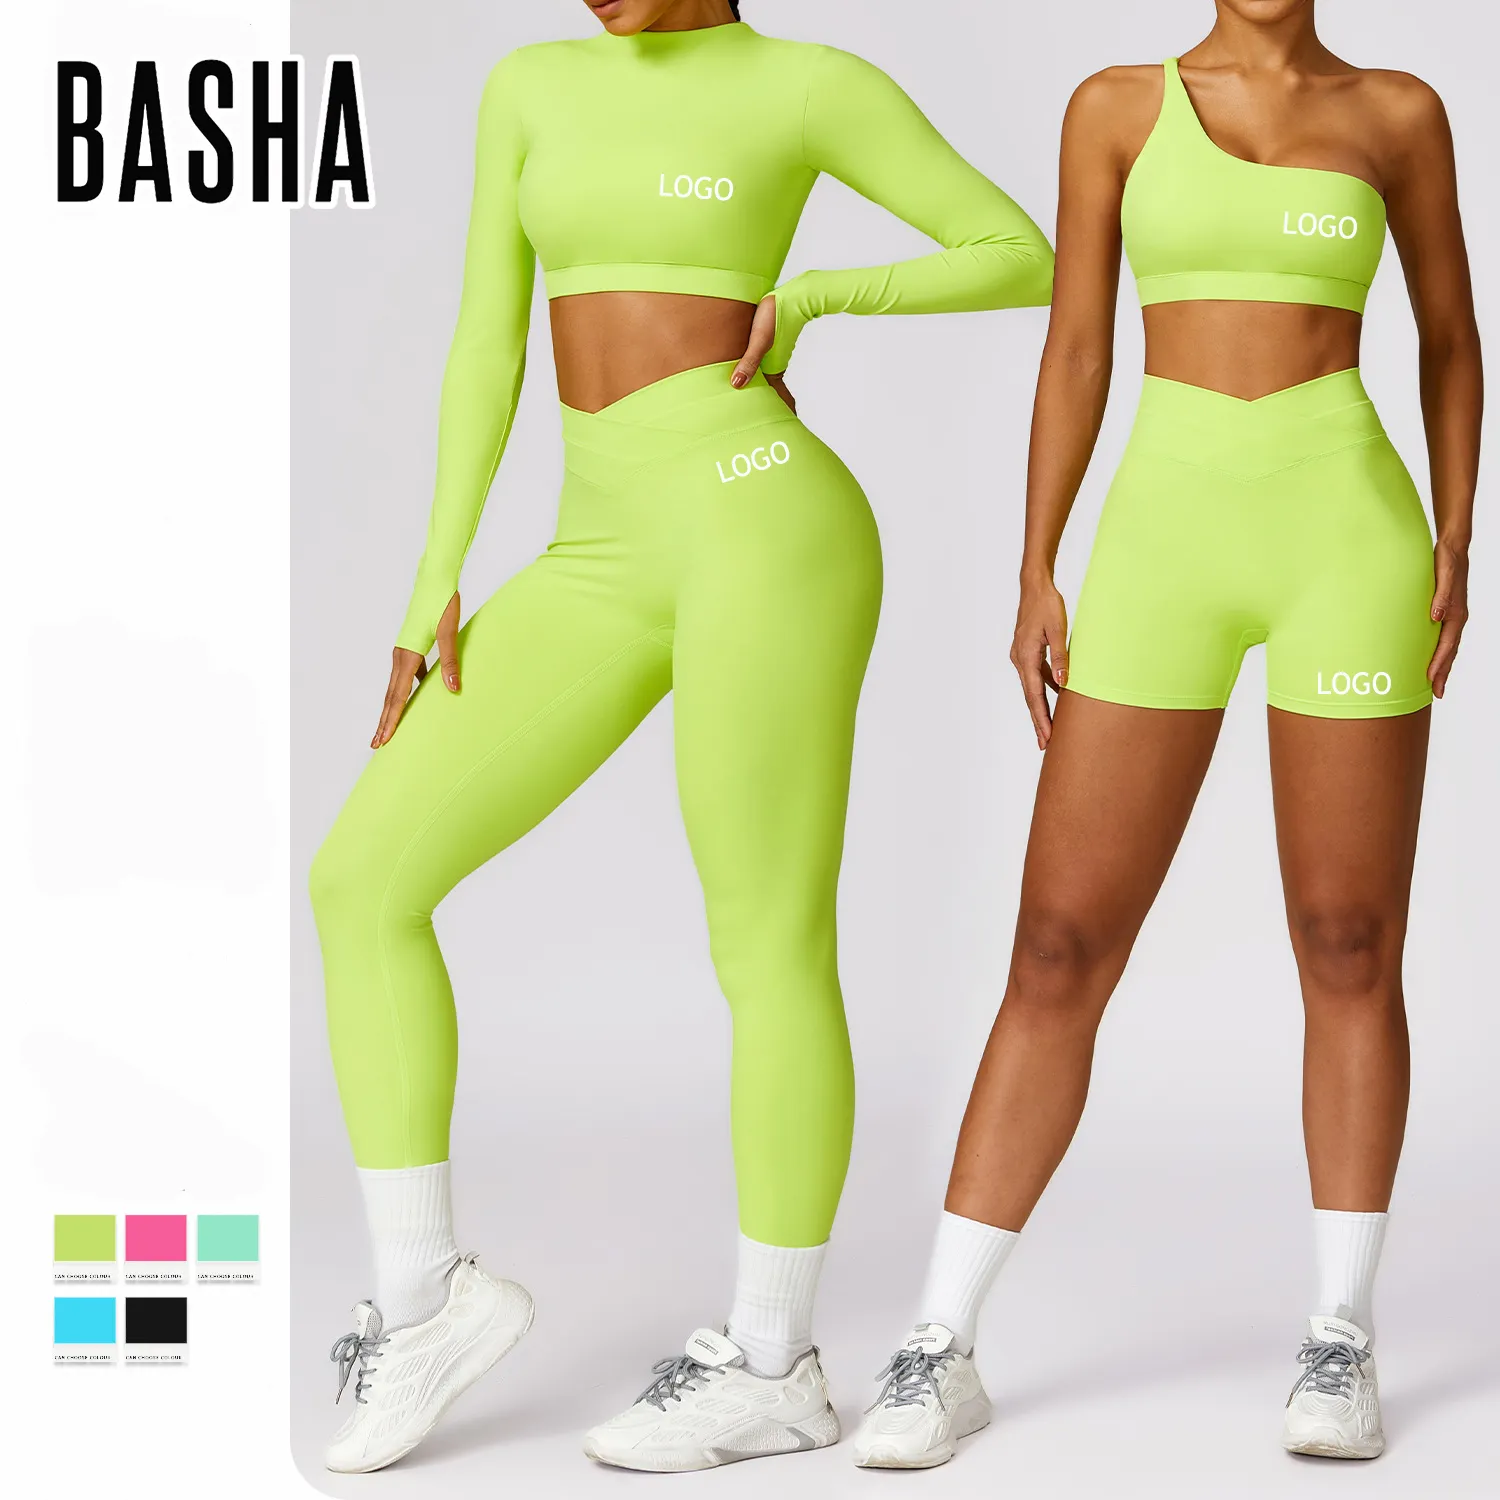 Bashasports אביב חדש מהיר יבש יופי גב יוגה סט שרוולים ארוכים בגדי כושר ריצה צמוד סט ספורט נשים